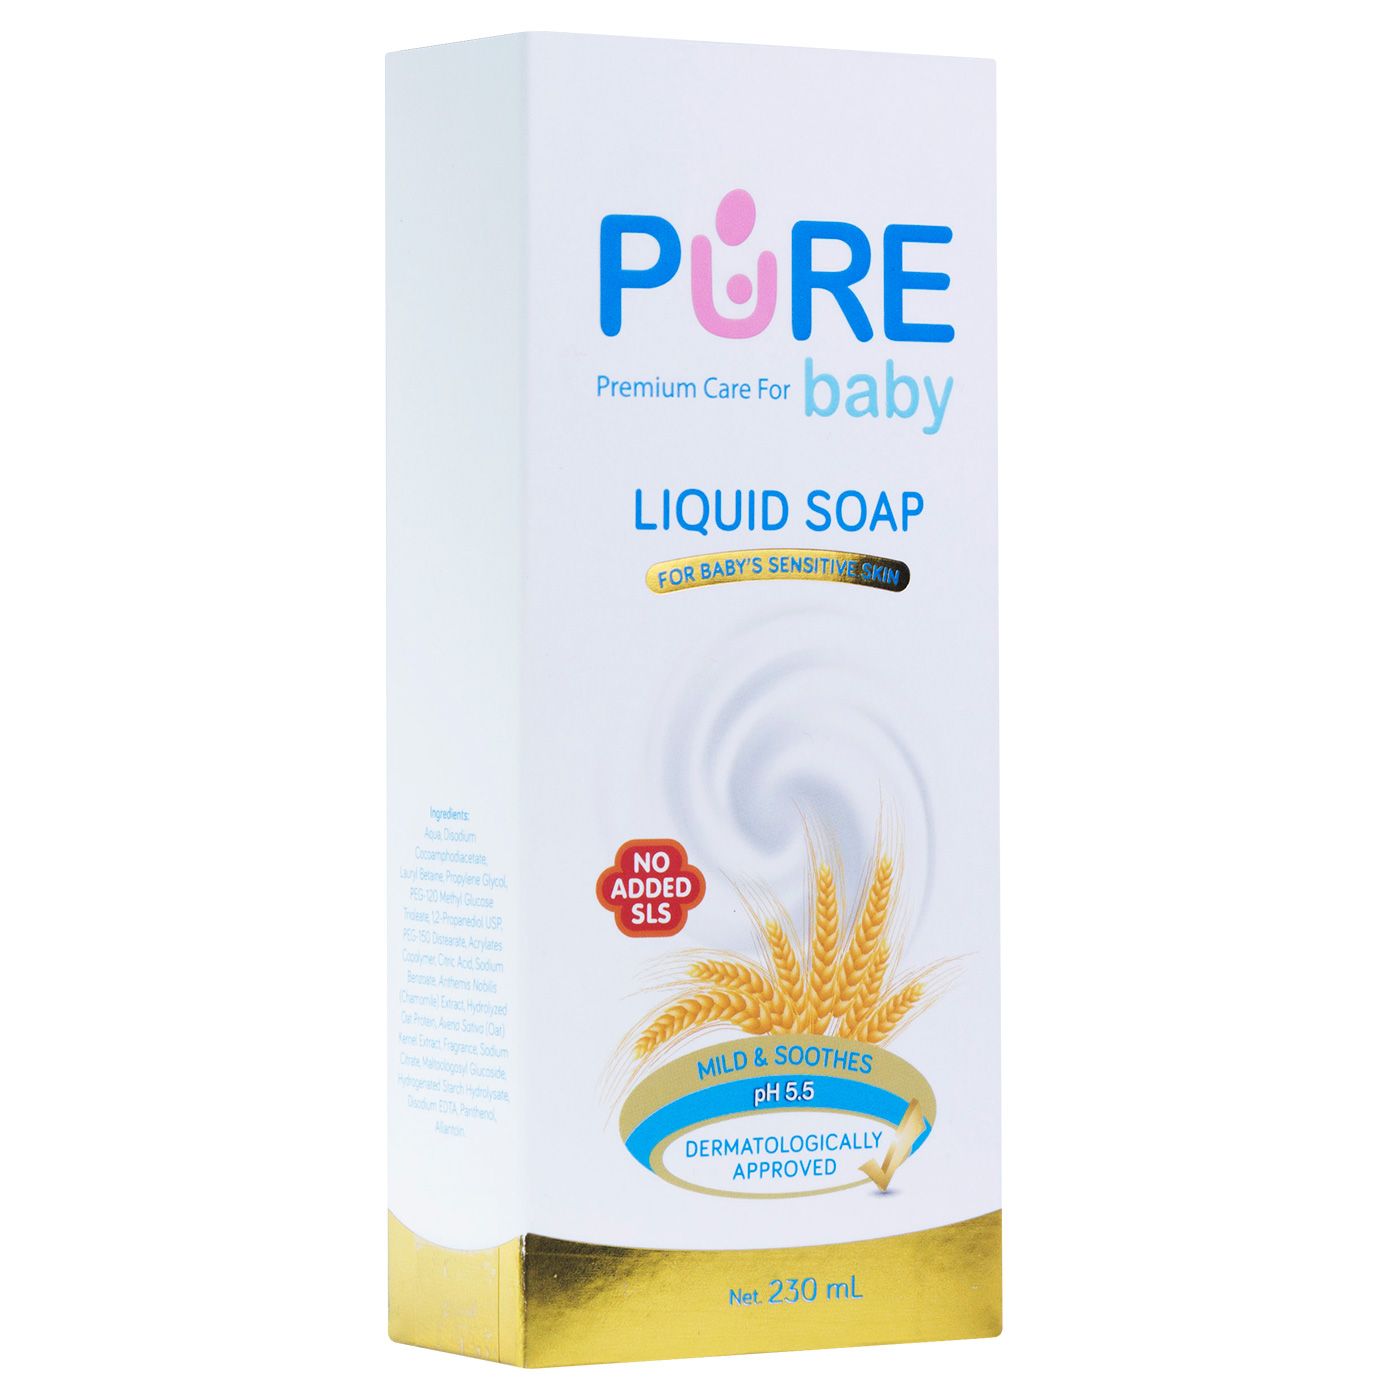 Pure baby Liquid Soap - 1